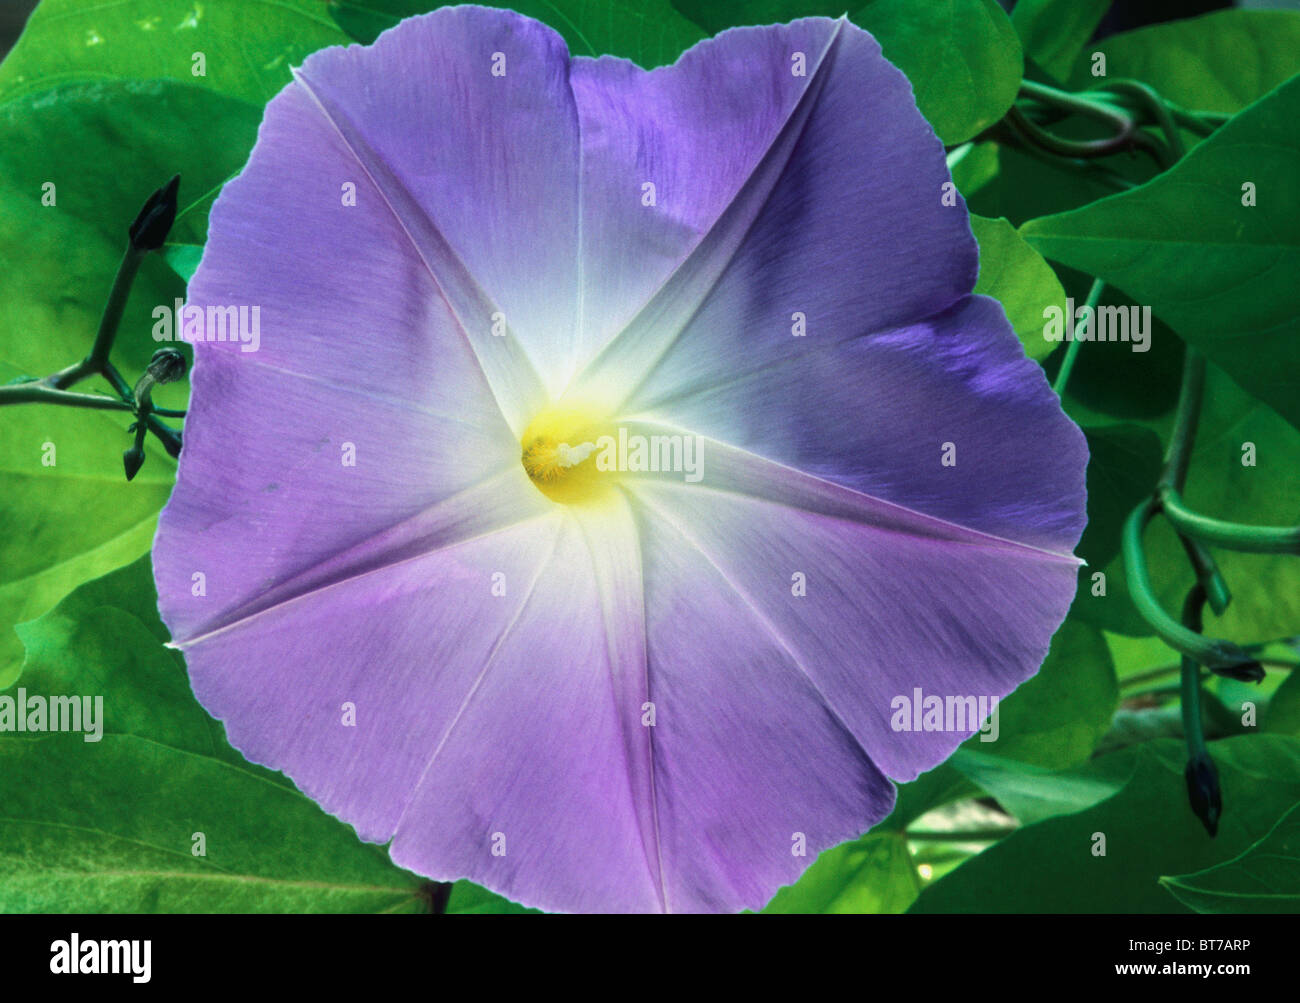 Morning Glory flower, close-up. Stock Photo